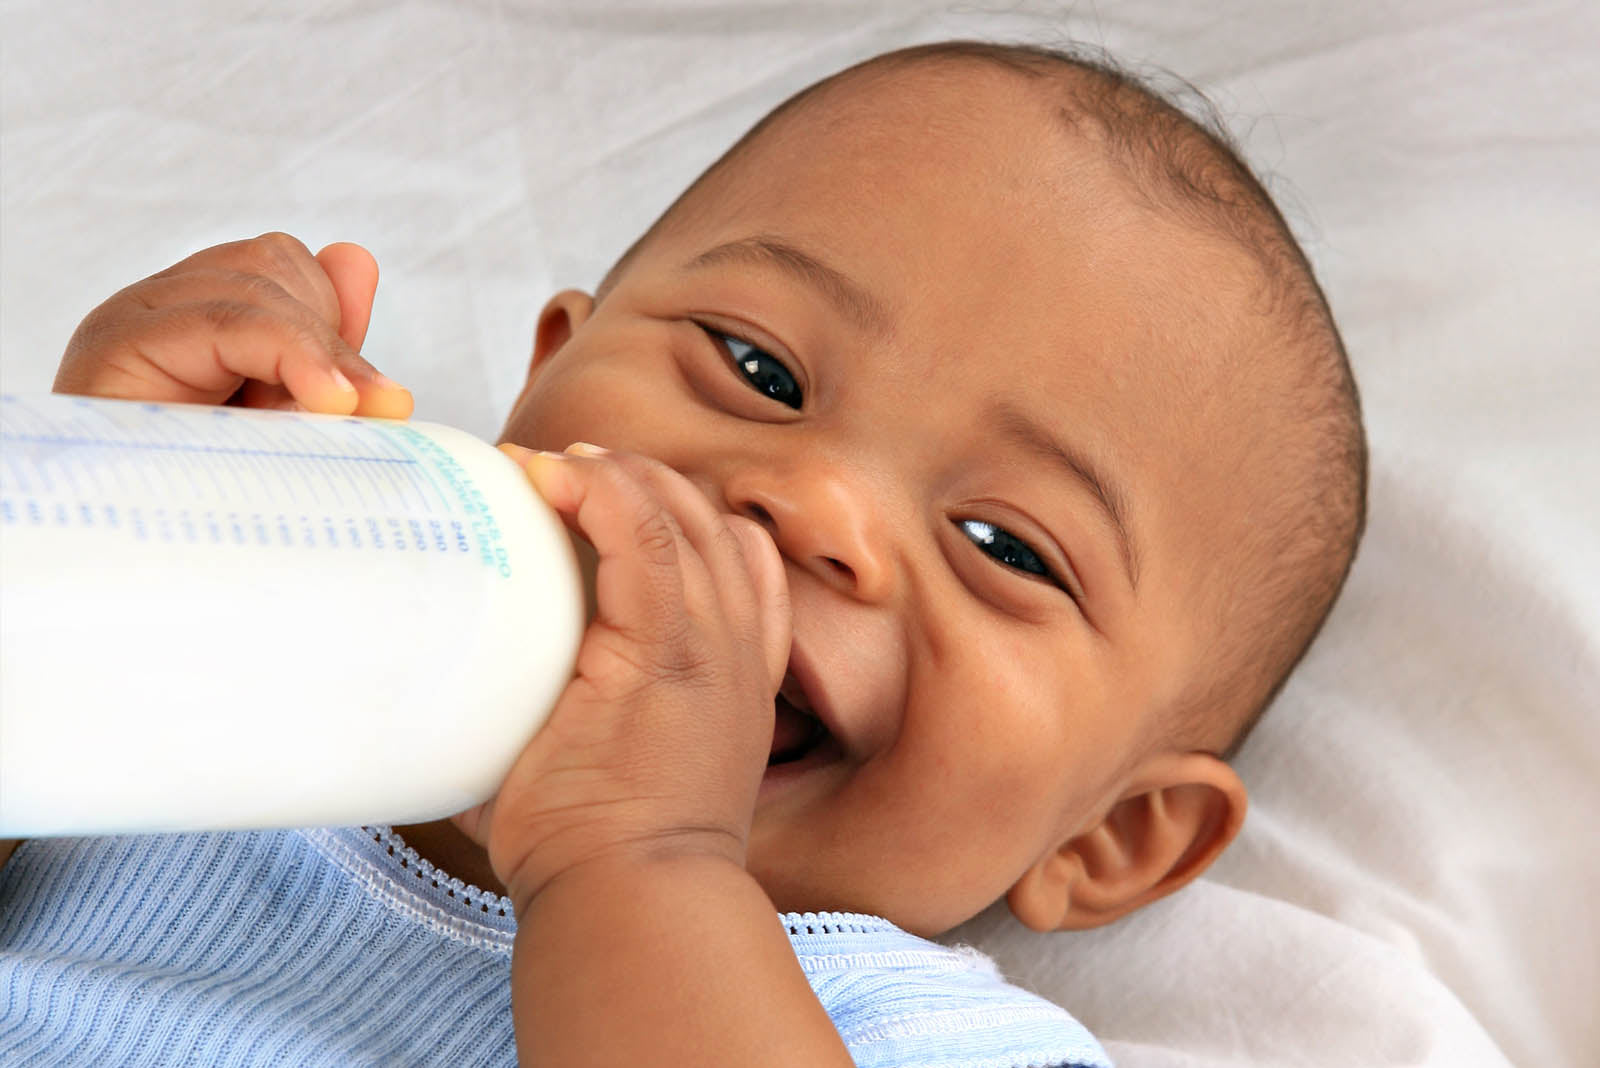 Baby formula & bottle-feeding for babies